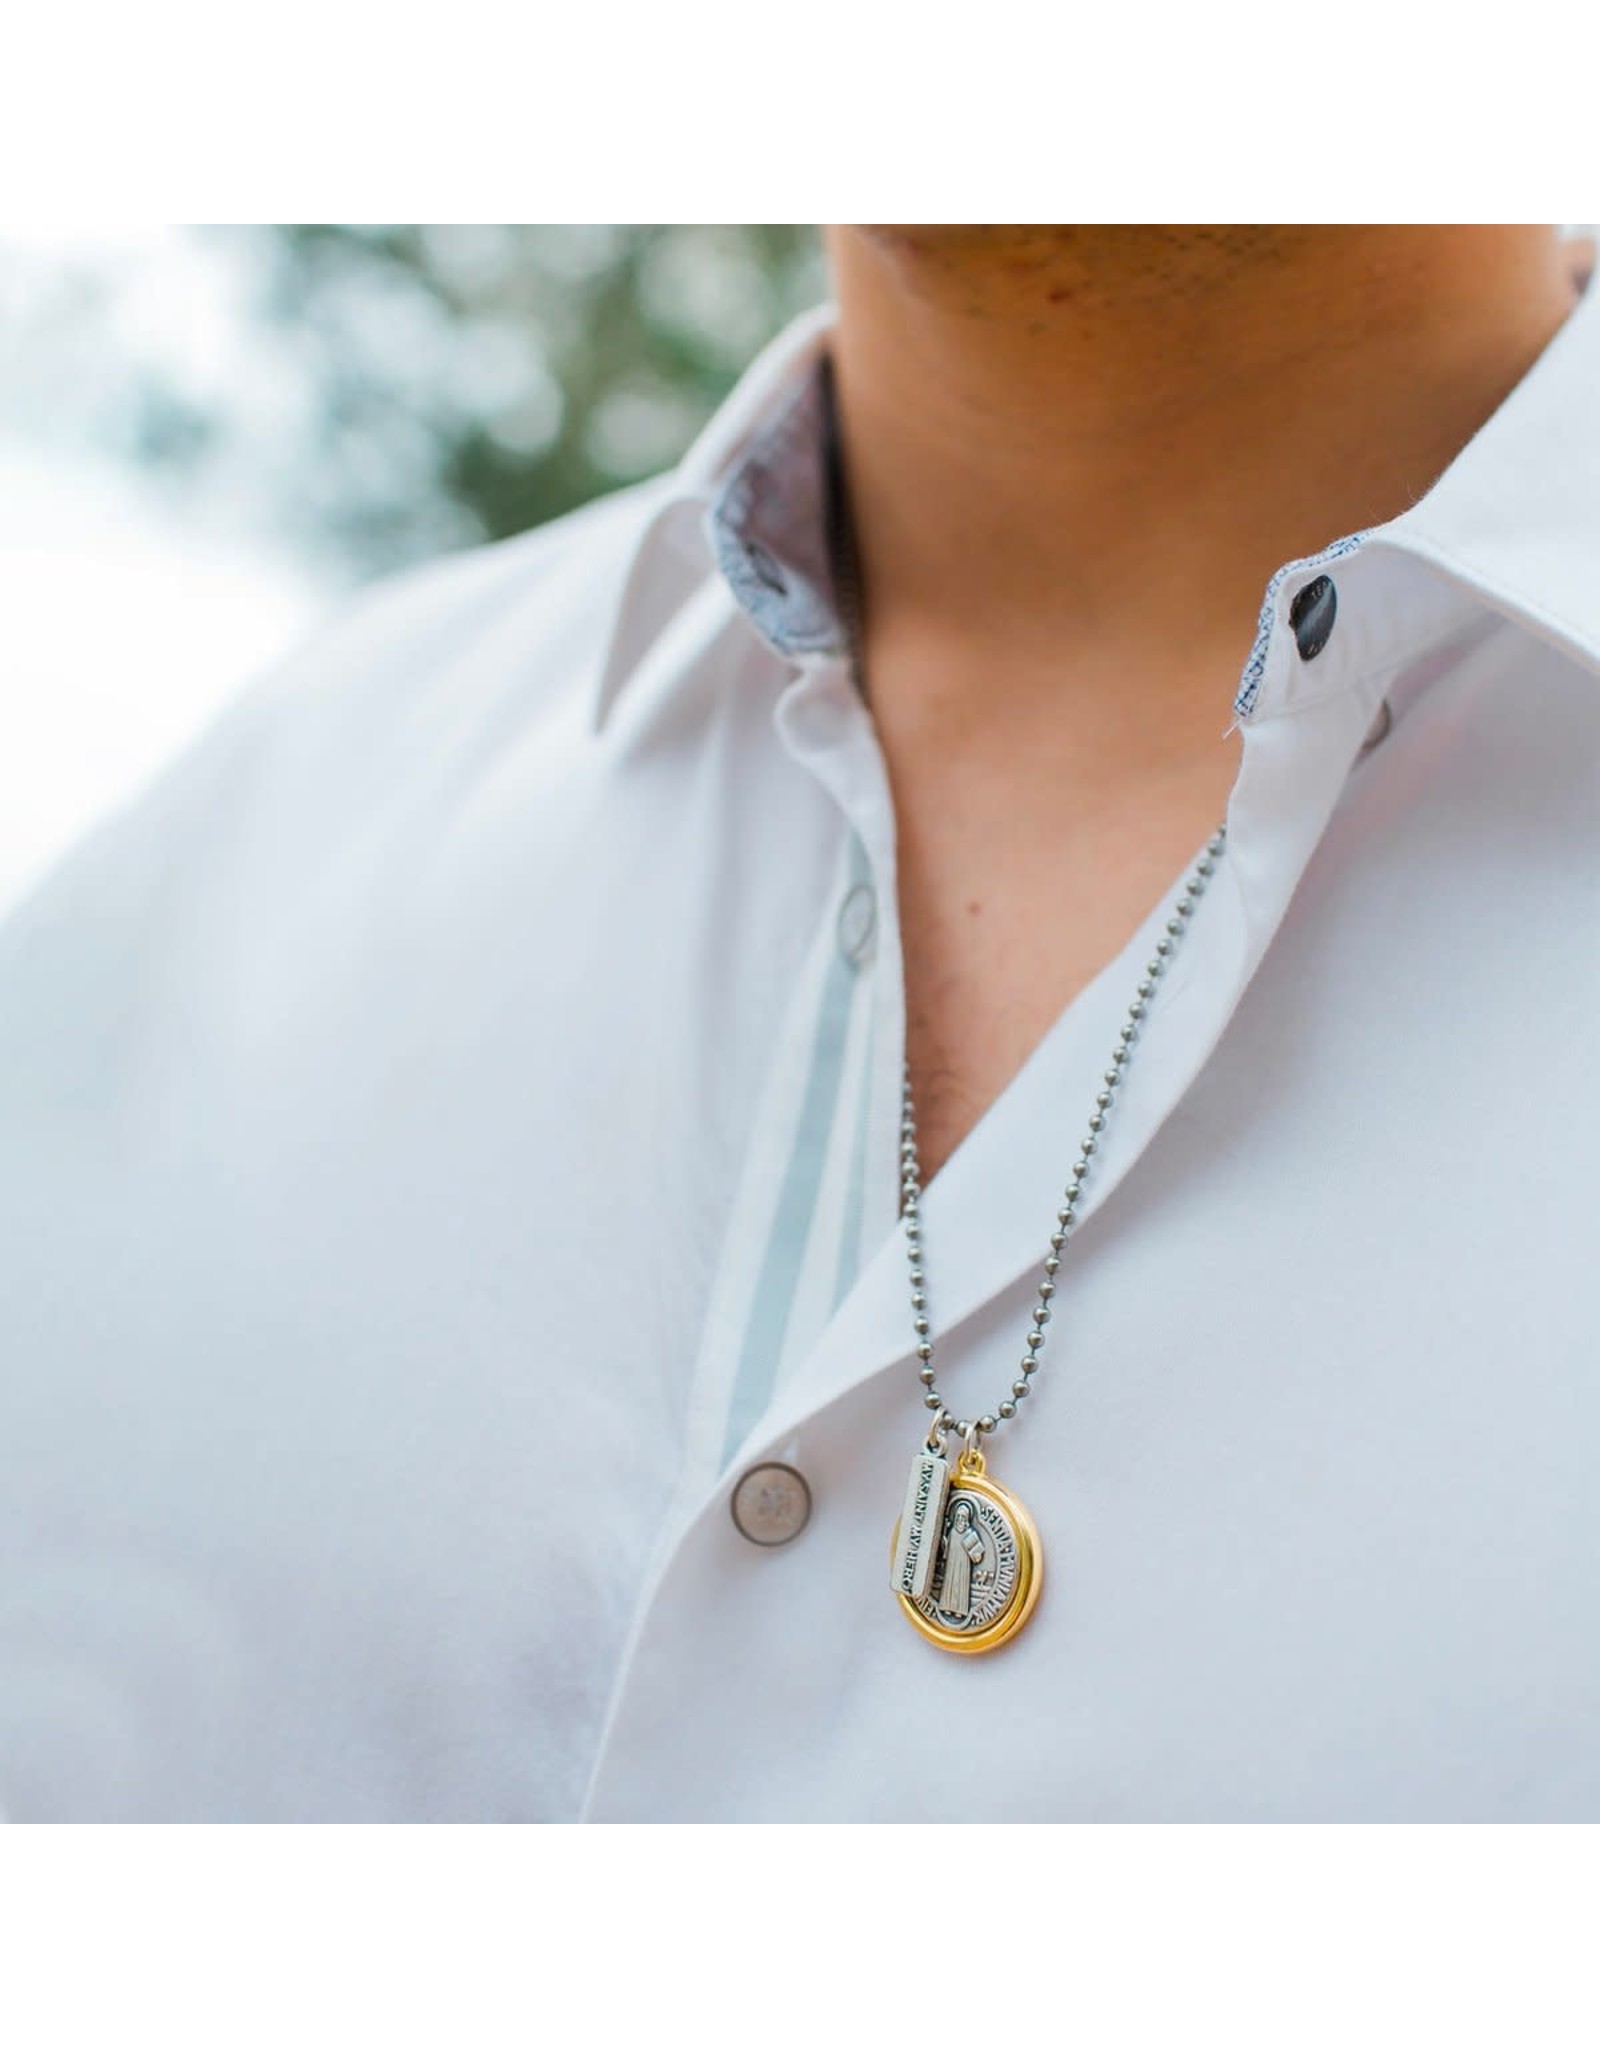 Necklace - Benedictine Blessing, Gold Rim